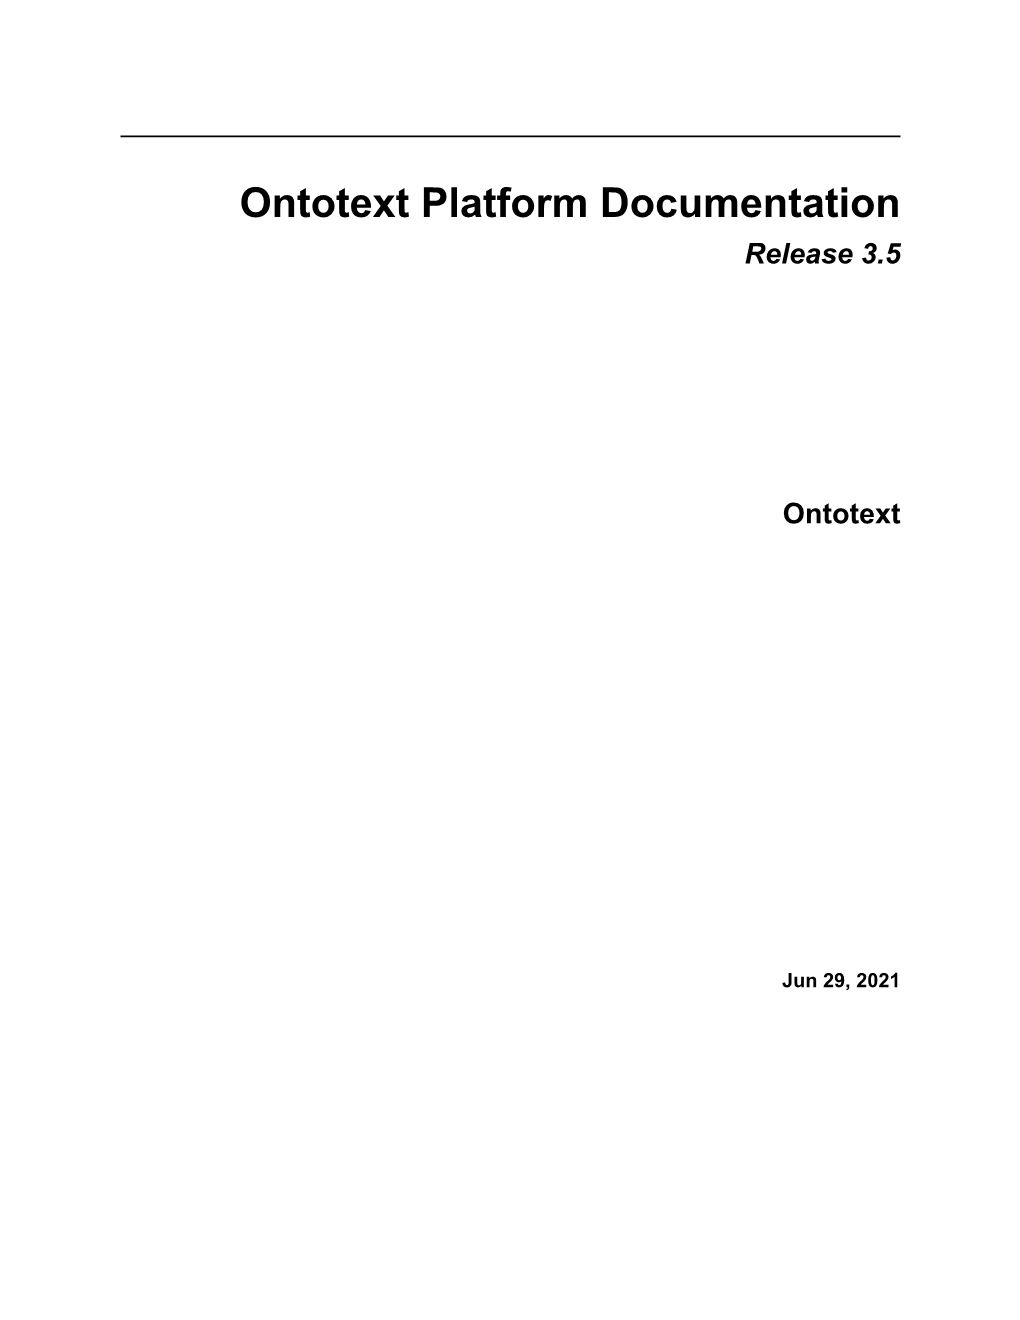 Ontotext Platform Documentation Release 3.5 Ontotext